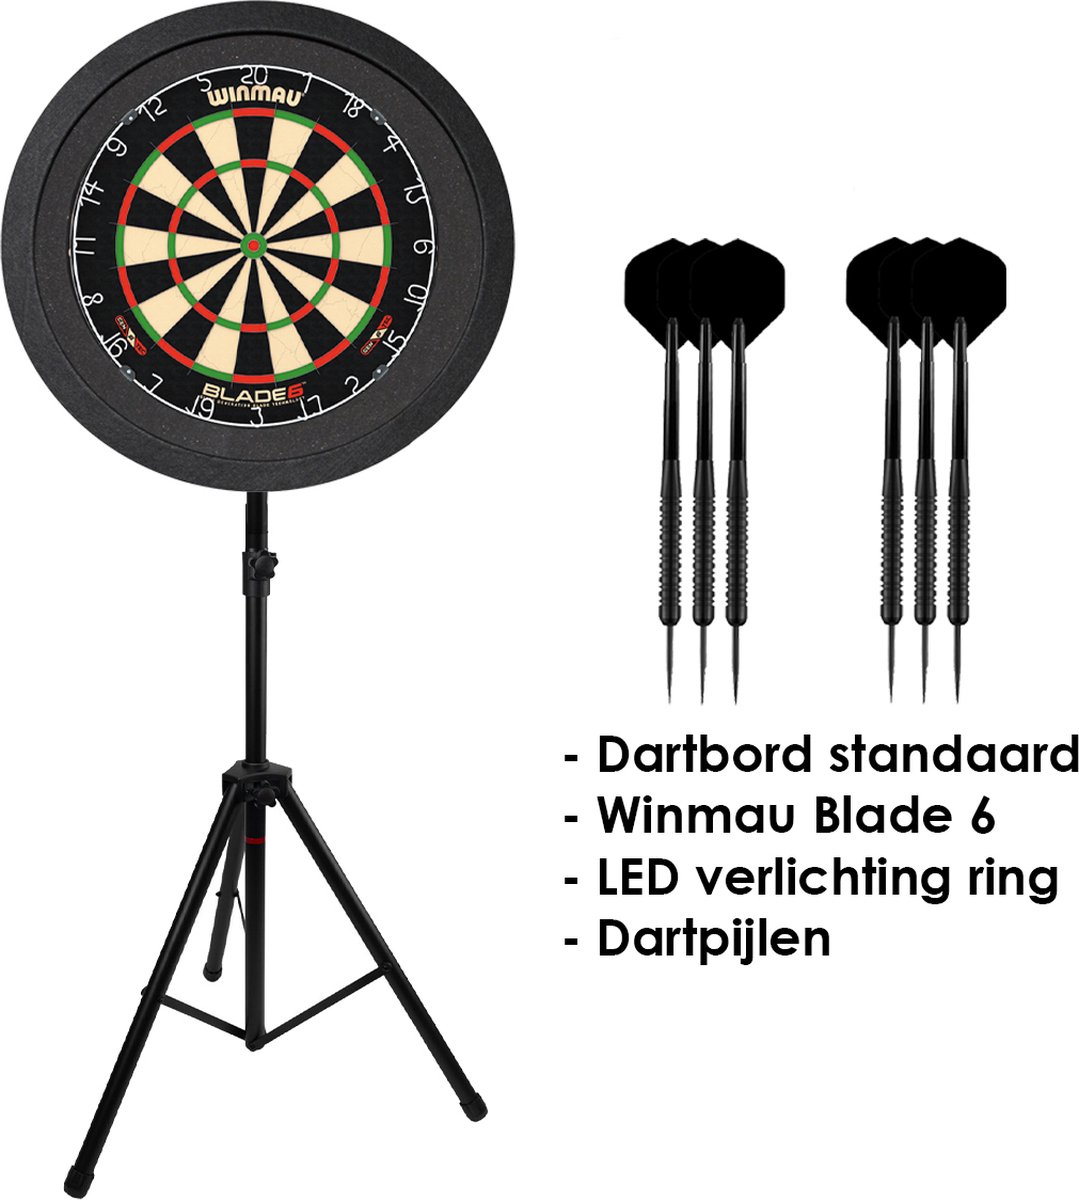 Dragon darts - Portable dartbord standaard LED pakket plus - inclusief Winmau Blade 6 - dartbord - LED surround ring - en - dartpijlen - zwart